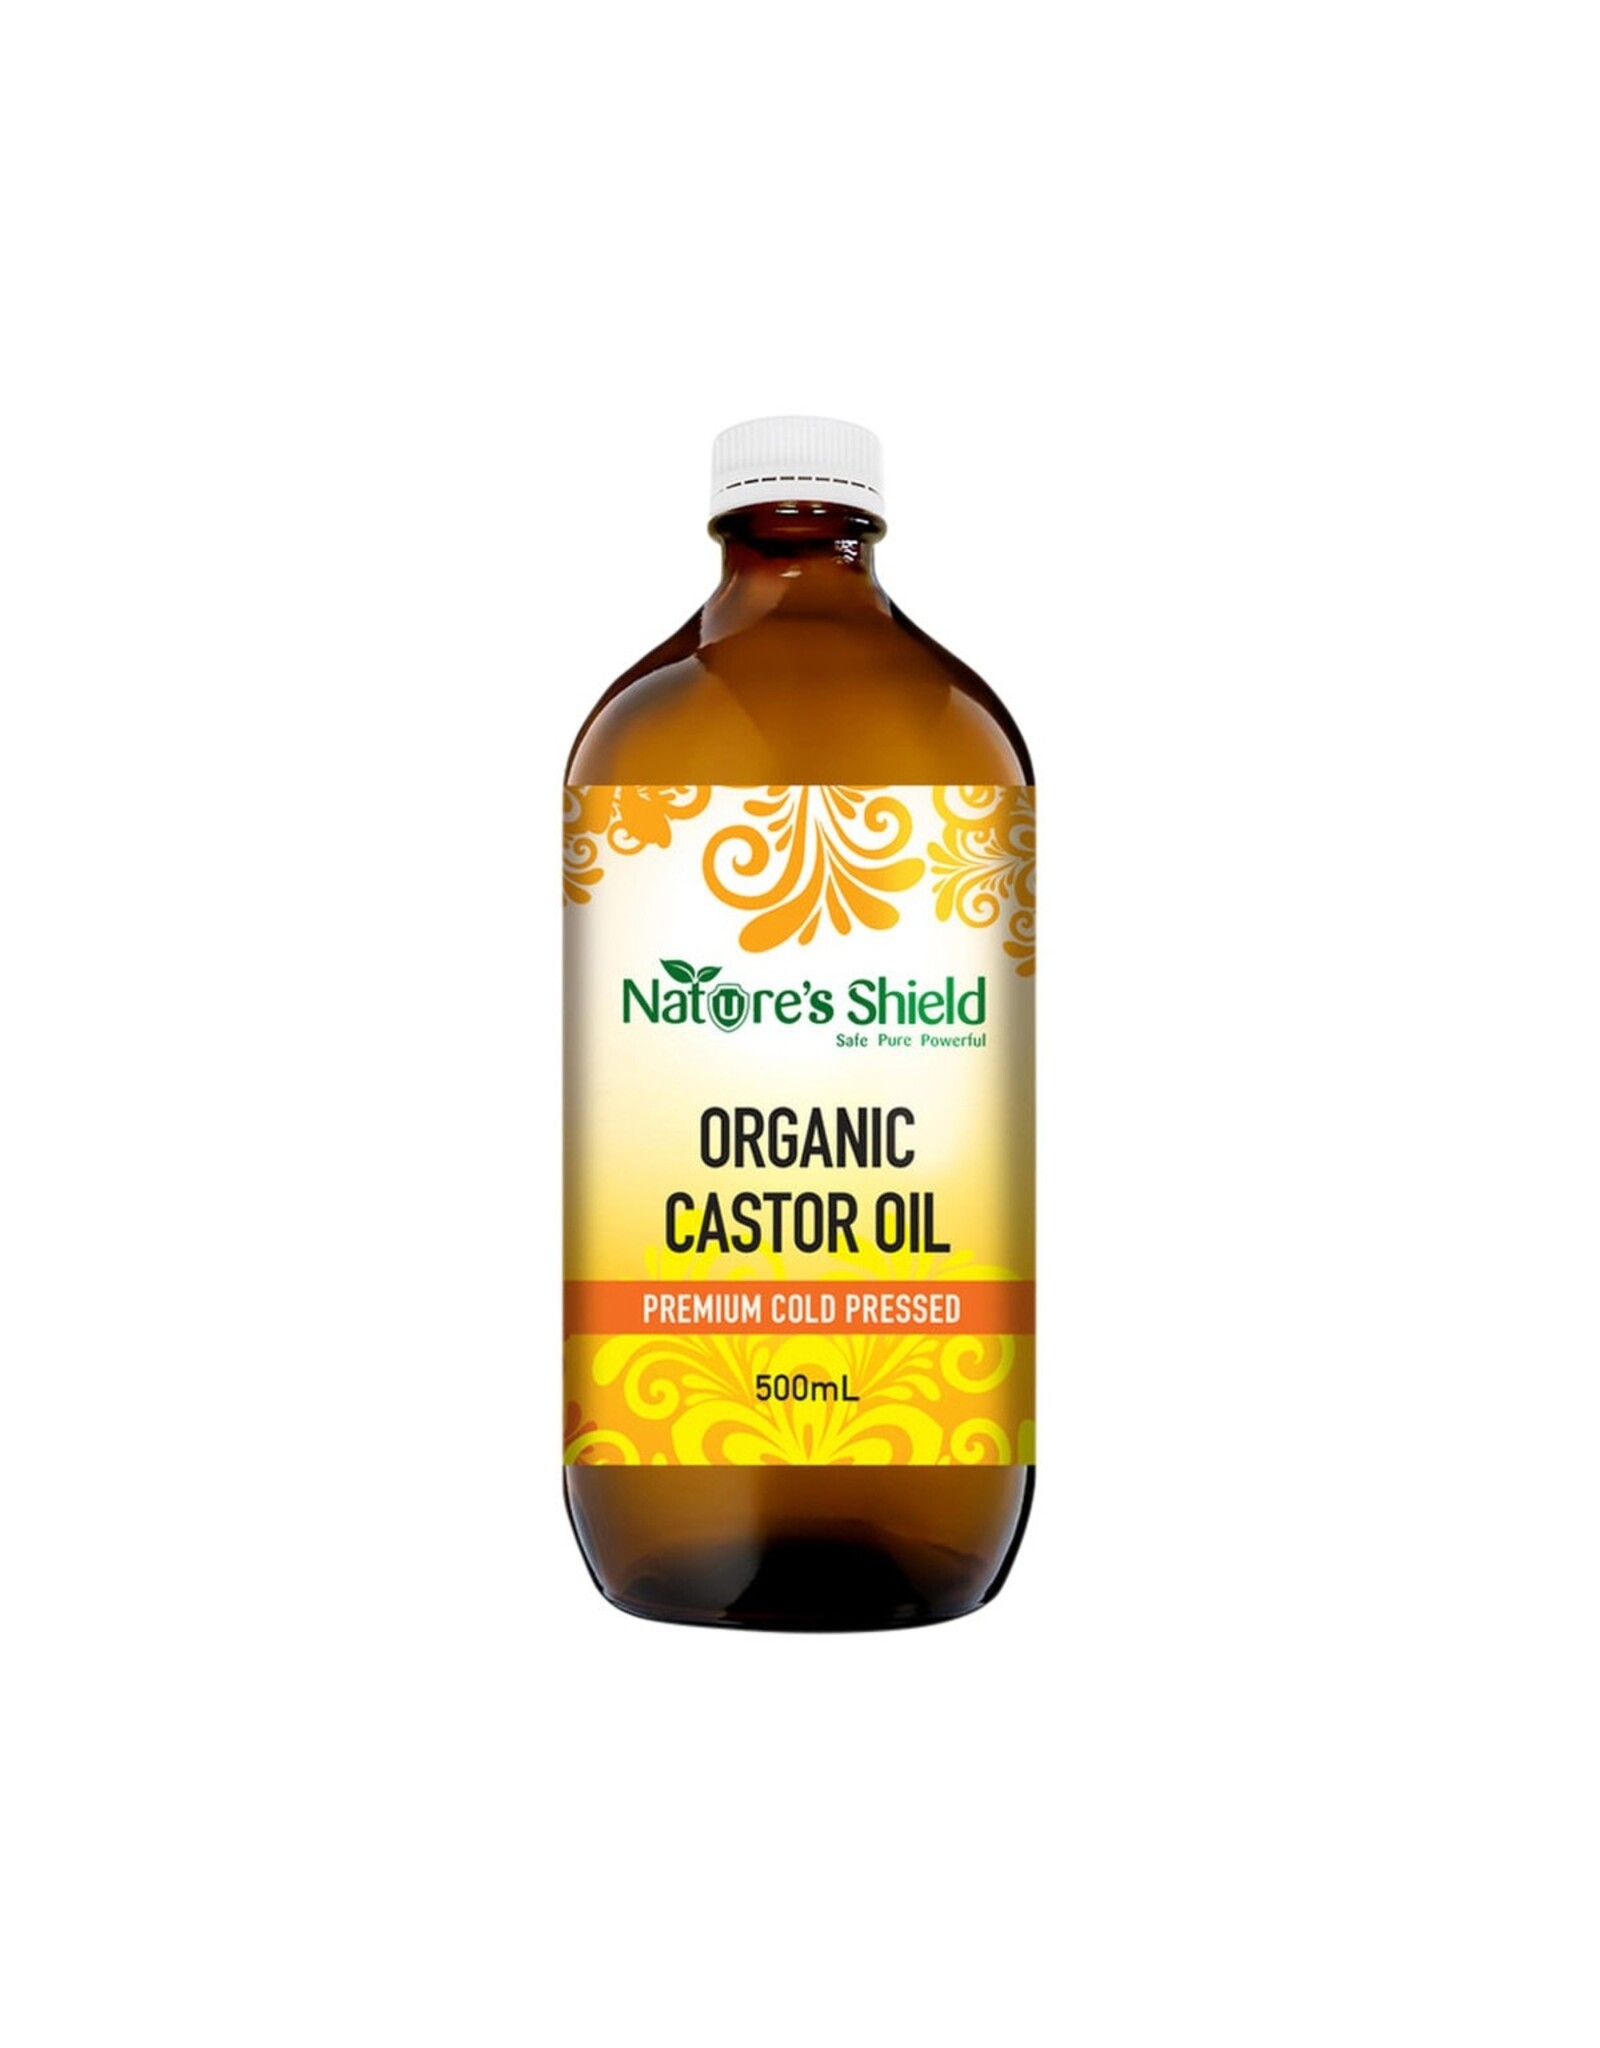 Nature's Shield Organic Castor Oil 500ml